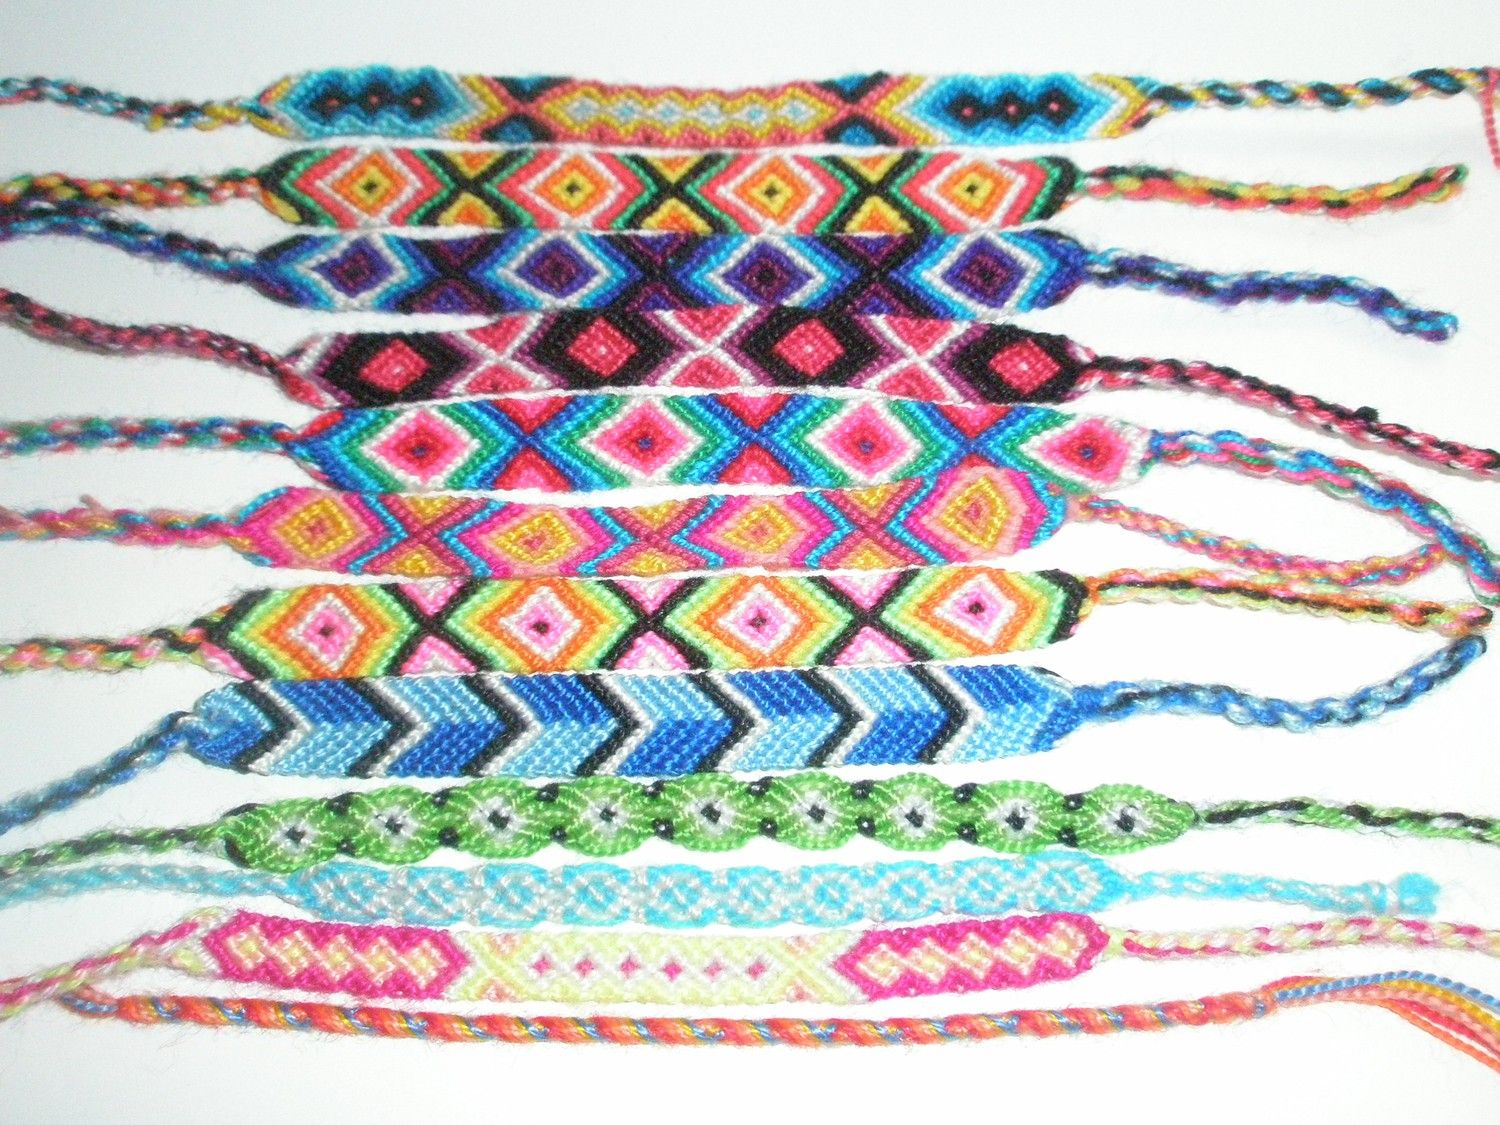 Embroidery Bracelets Patterns Pretty Design Embroidery Thread Bracelets Diy Friendship 5 Easy